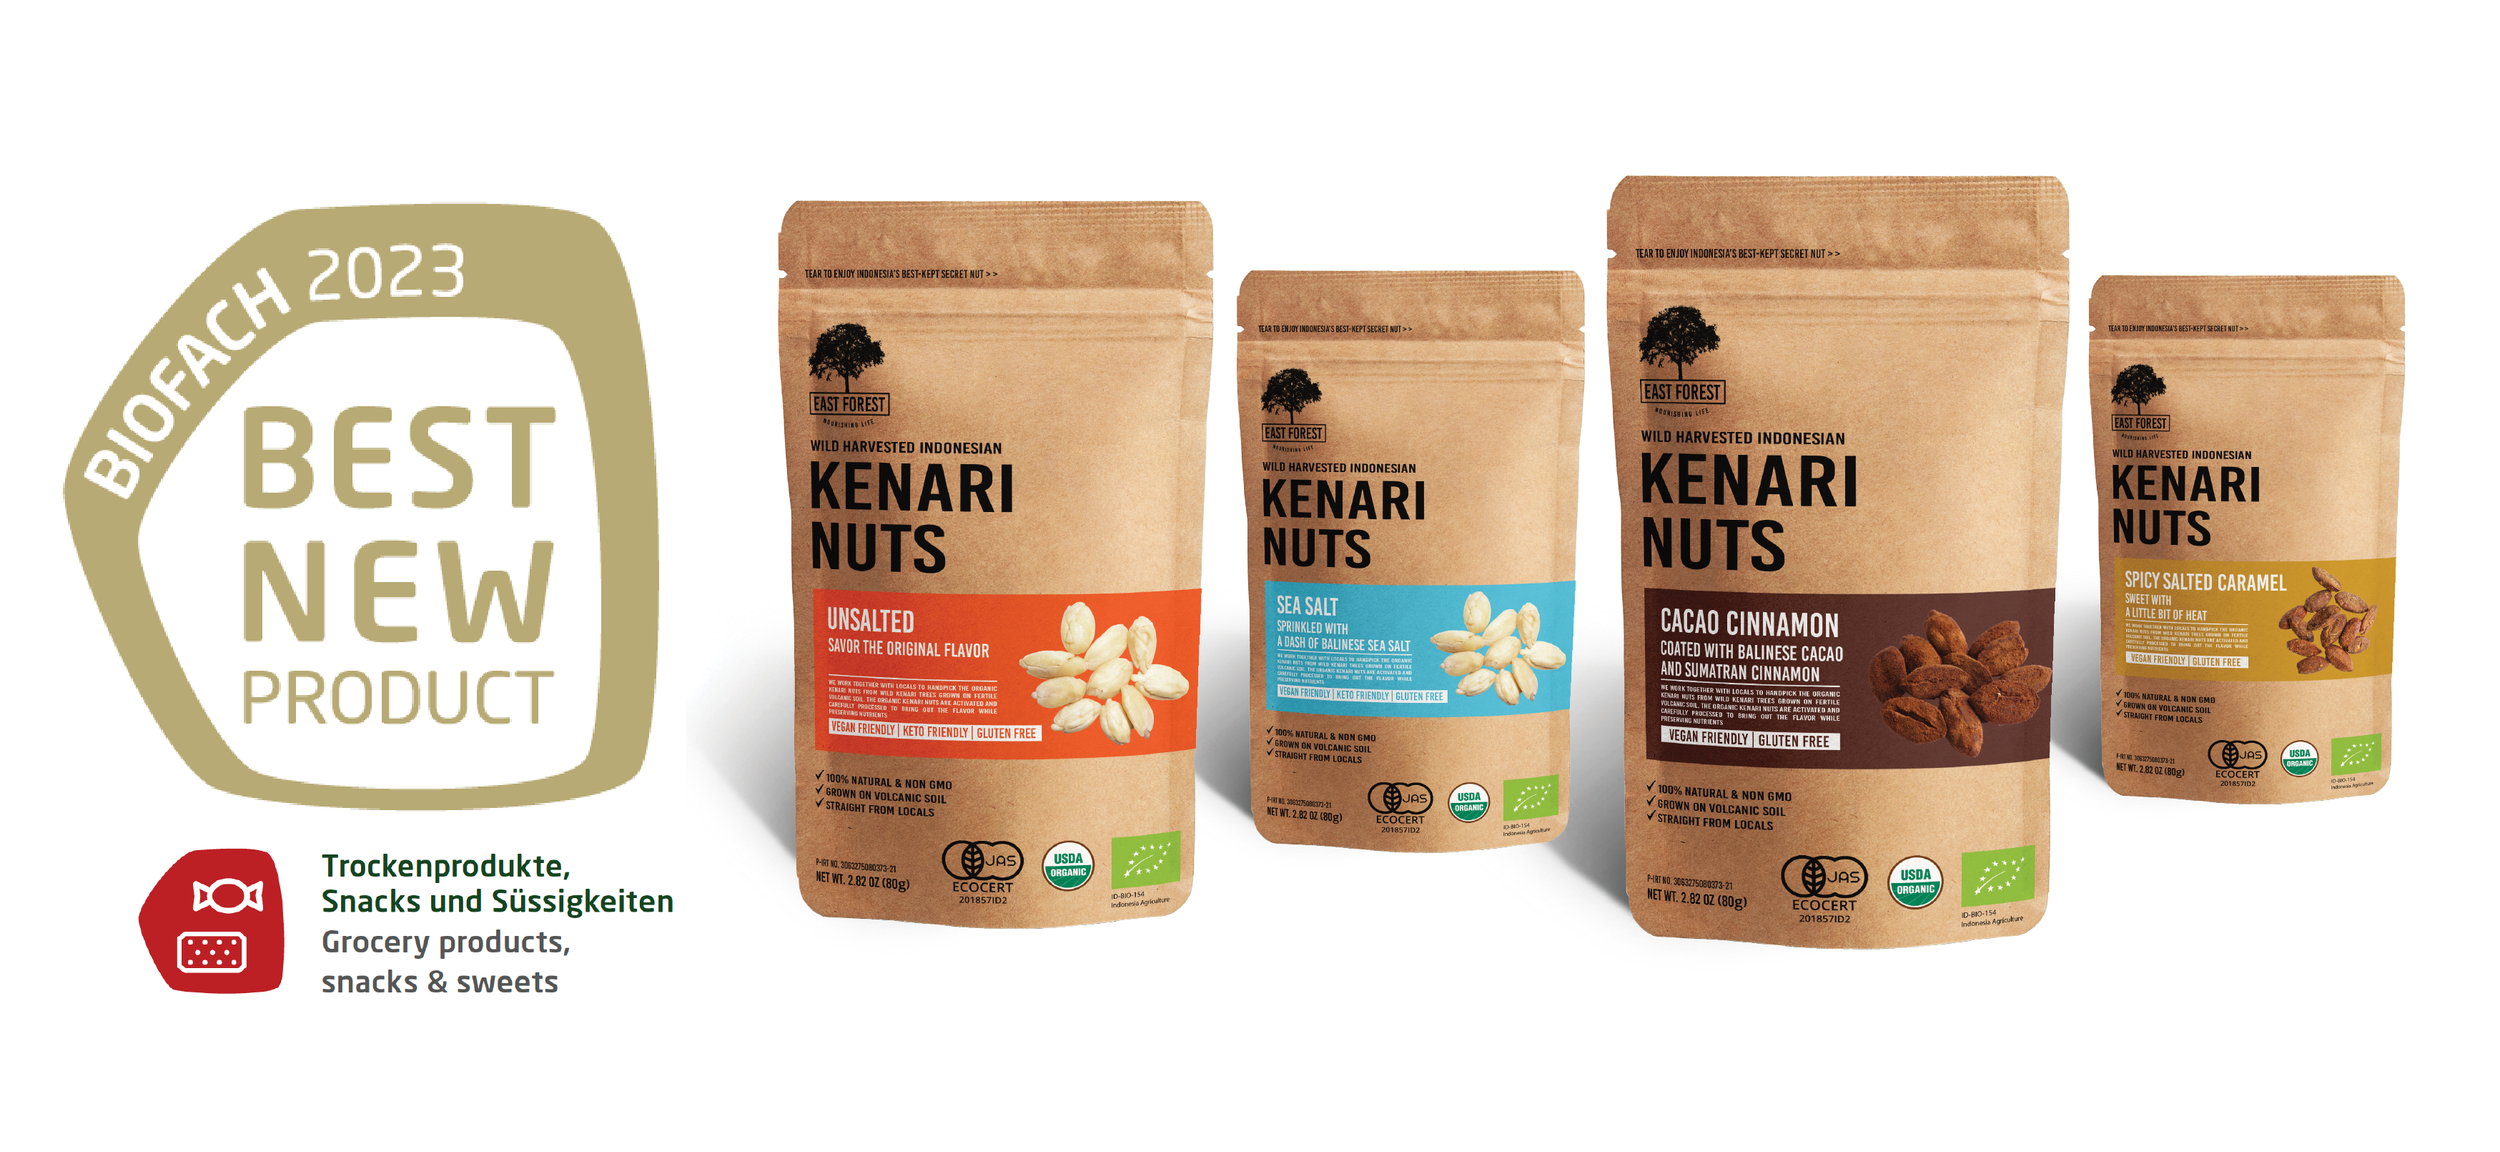 East Forest Kenari Nuts Kenari Nuss wins Best New Product 2023 at Biofach Nuremberg 2023